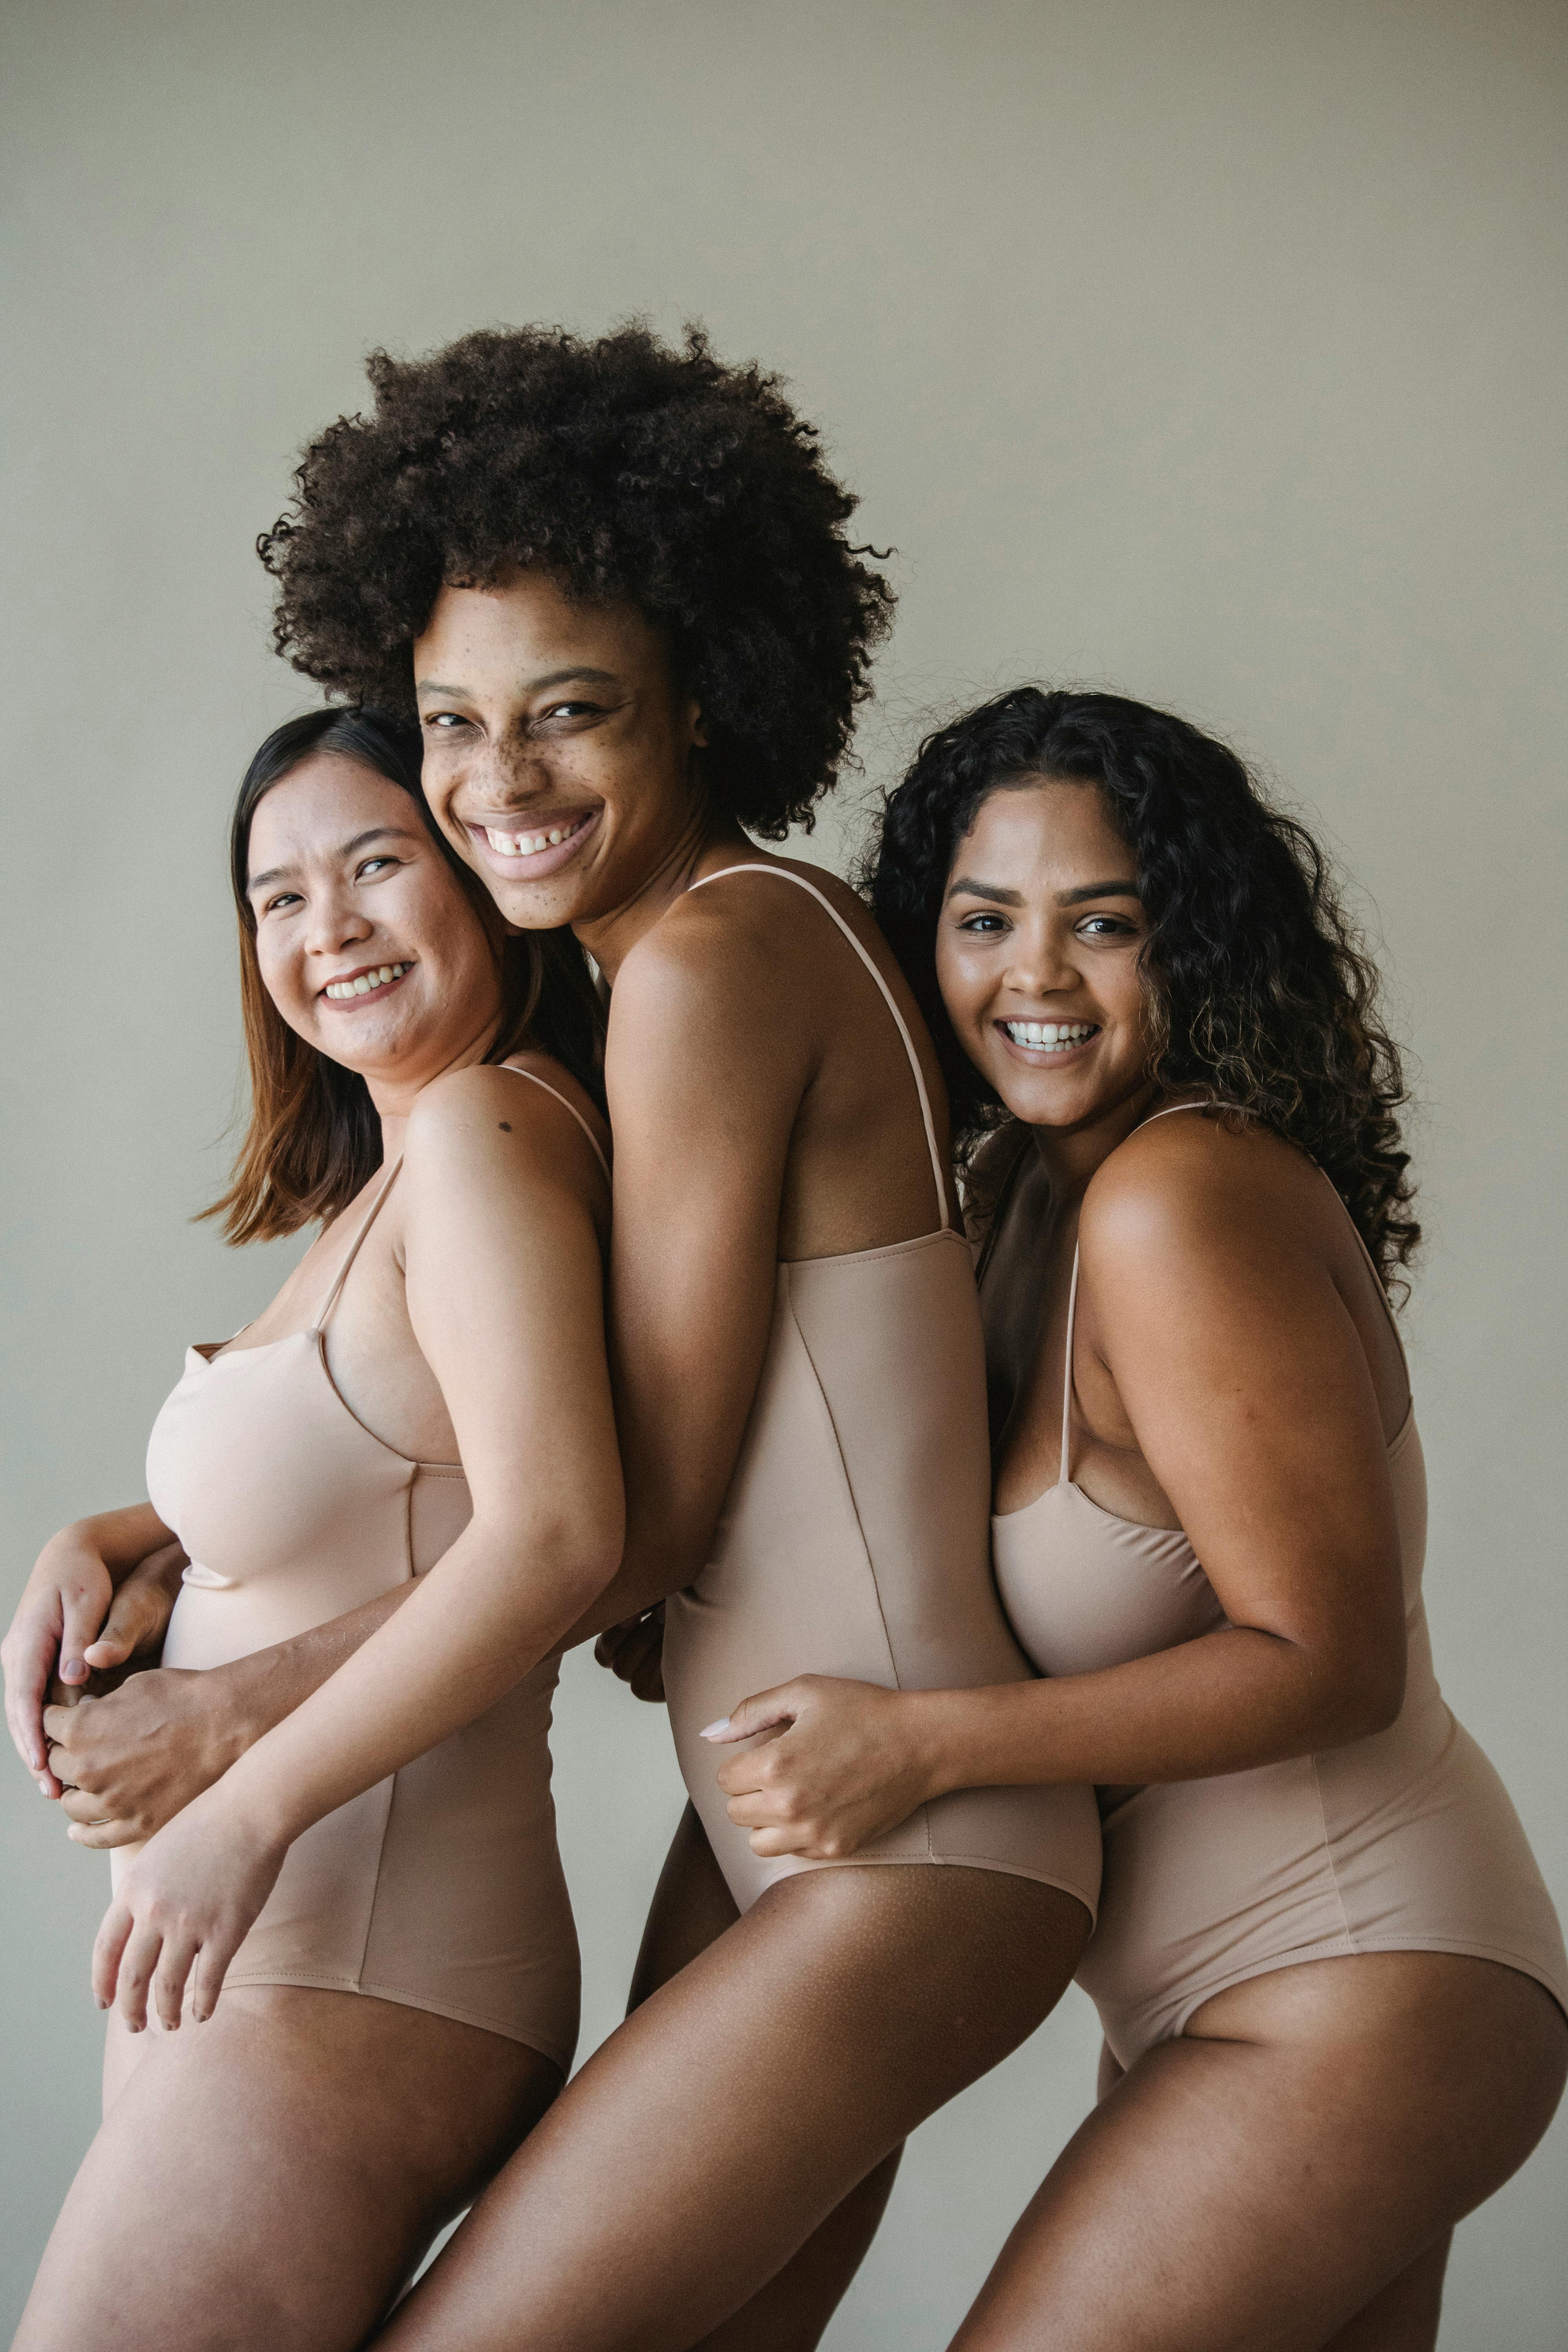 Women Posing in Nude Bodysuits Smiling · Free Stock Photo